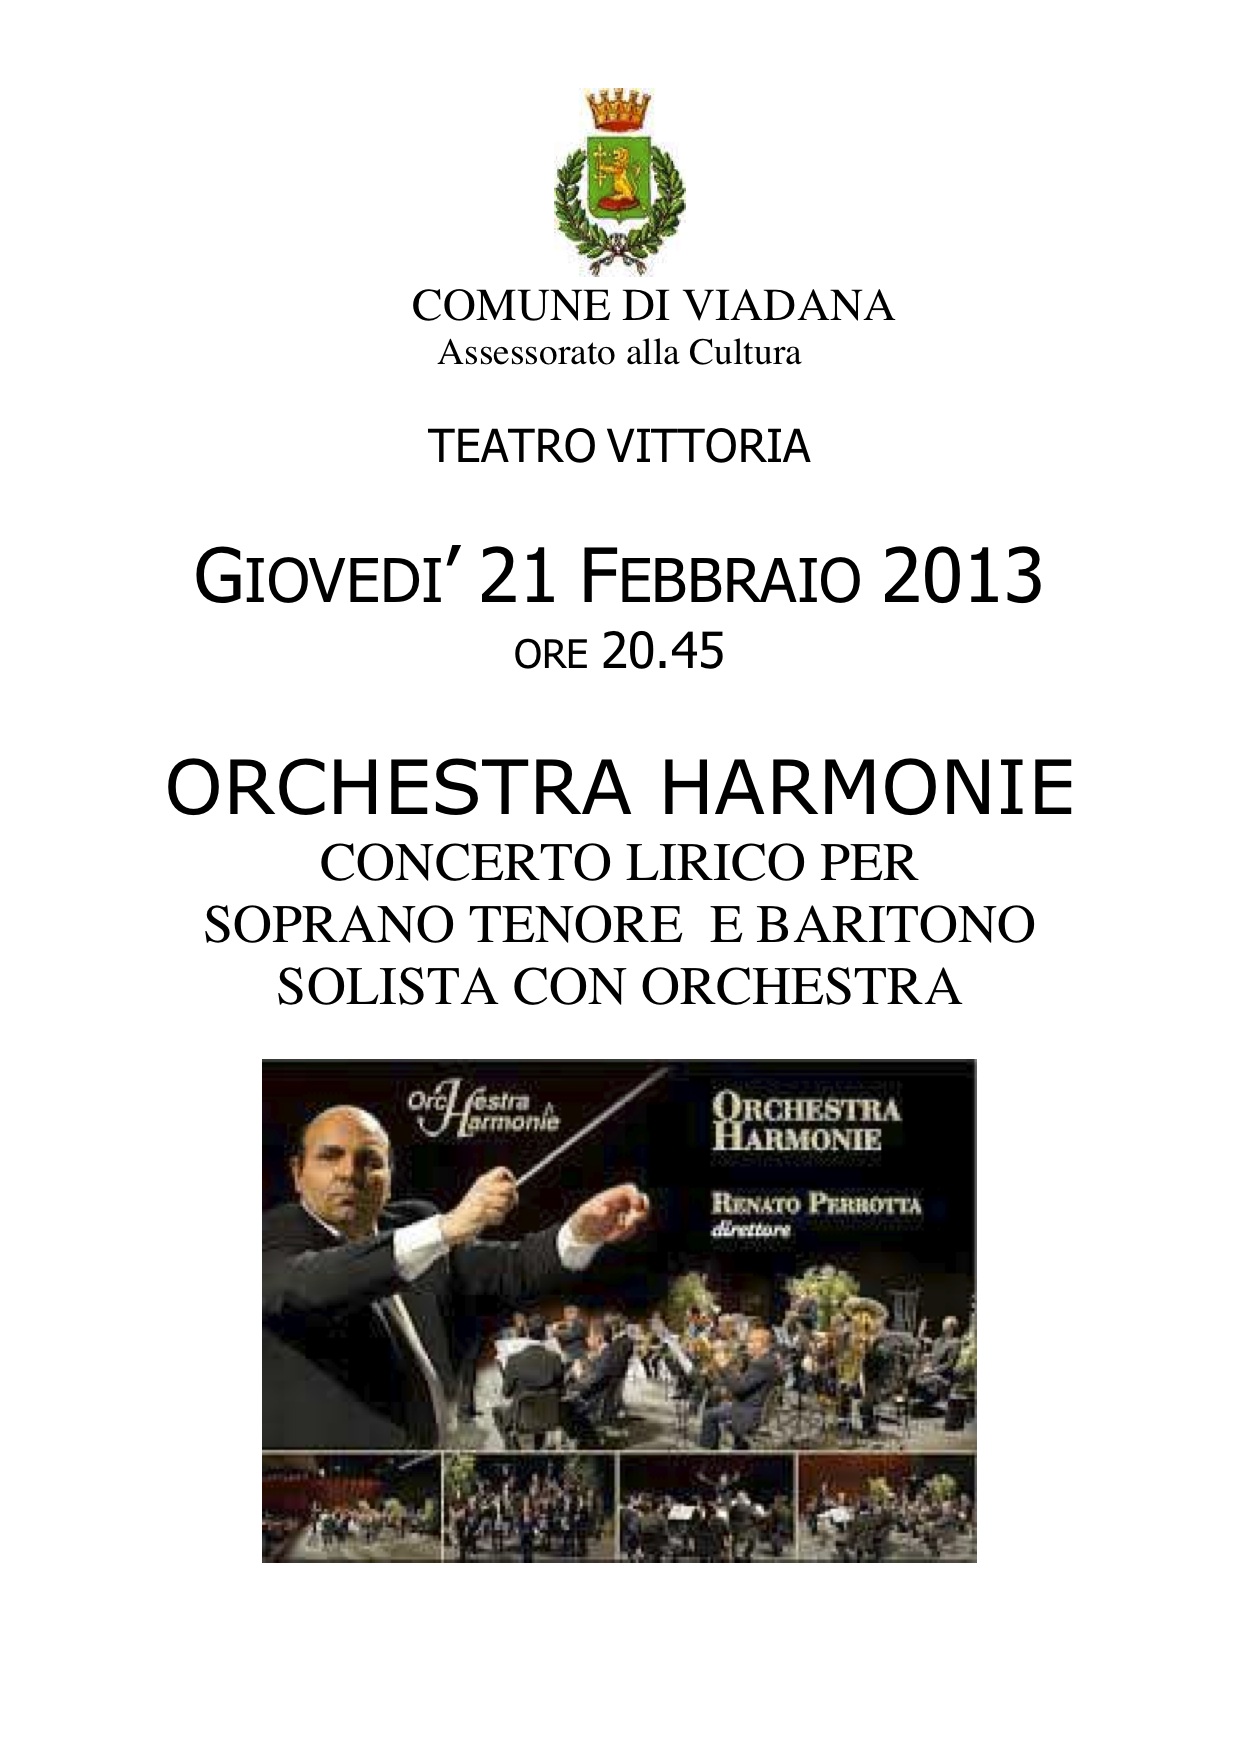 Concerto al Teatro Vittoria di Viadana, Mantovaa